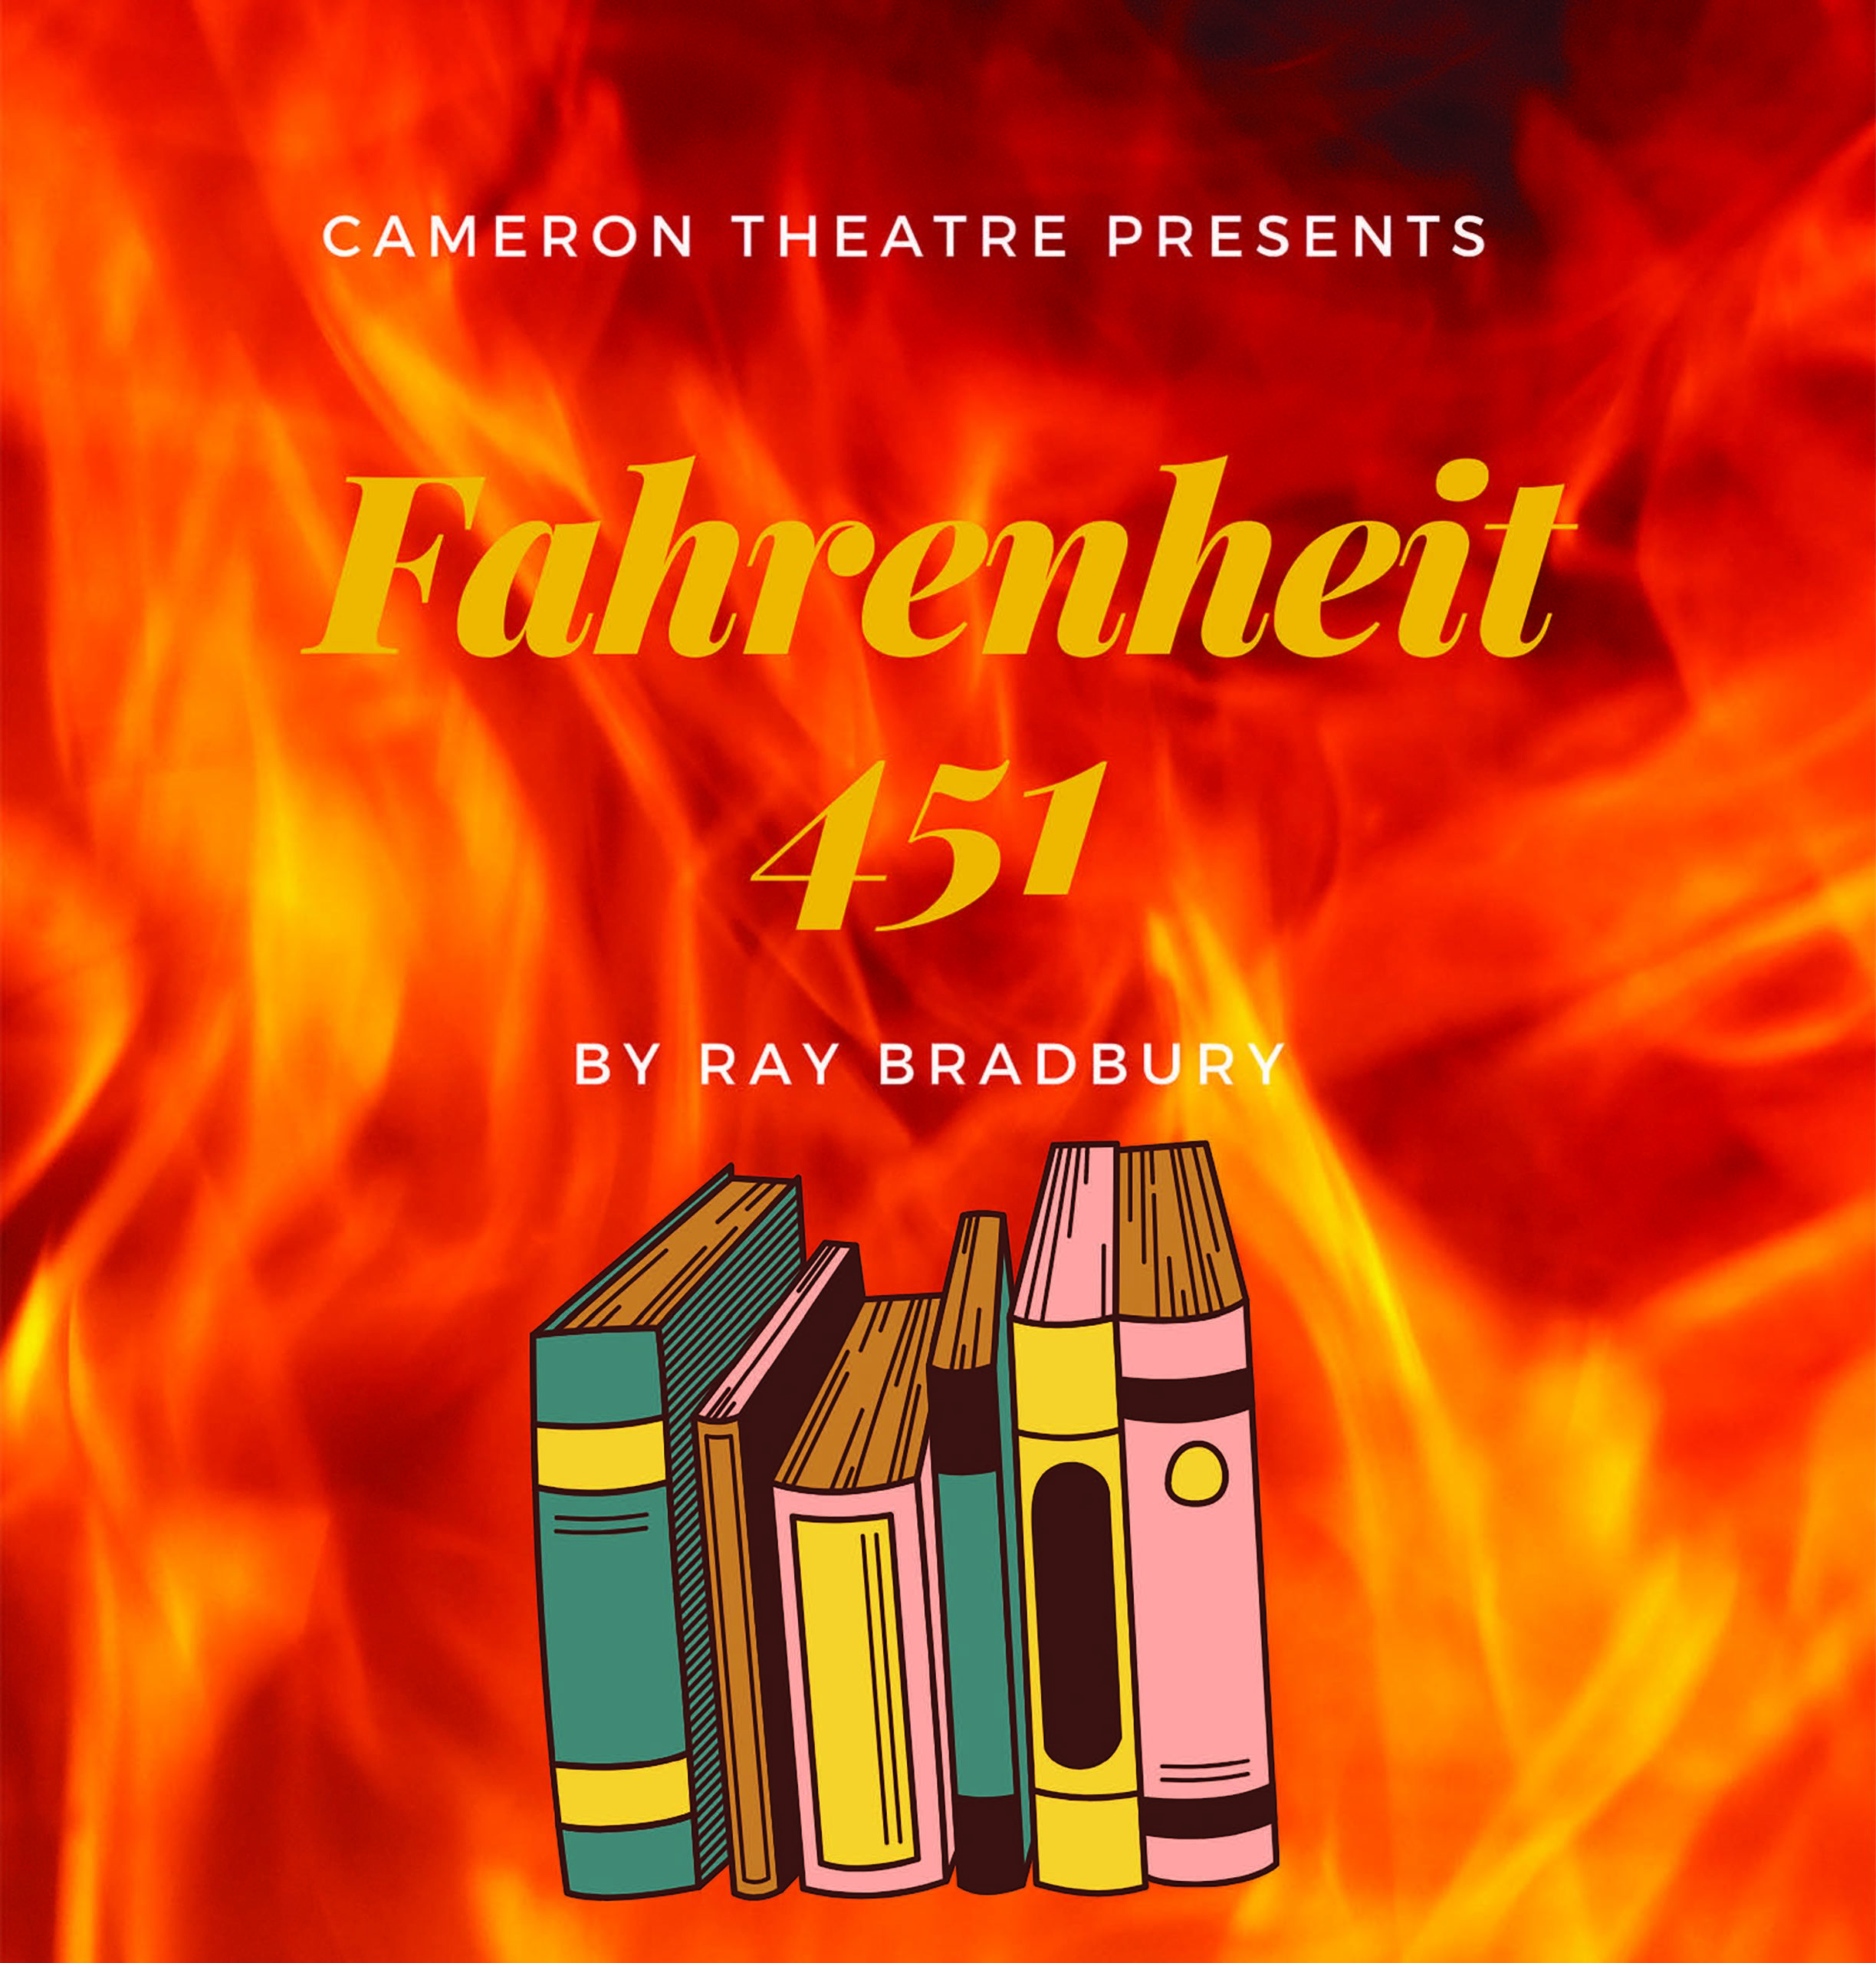 Cameron Theatre Presents: Fahrenheit 451